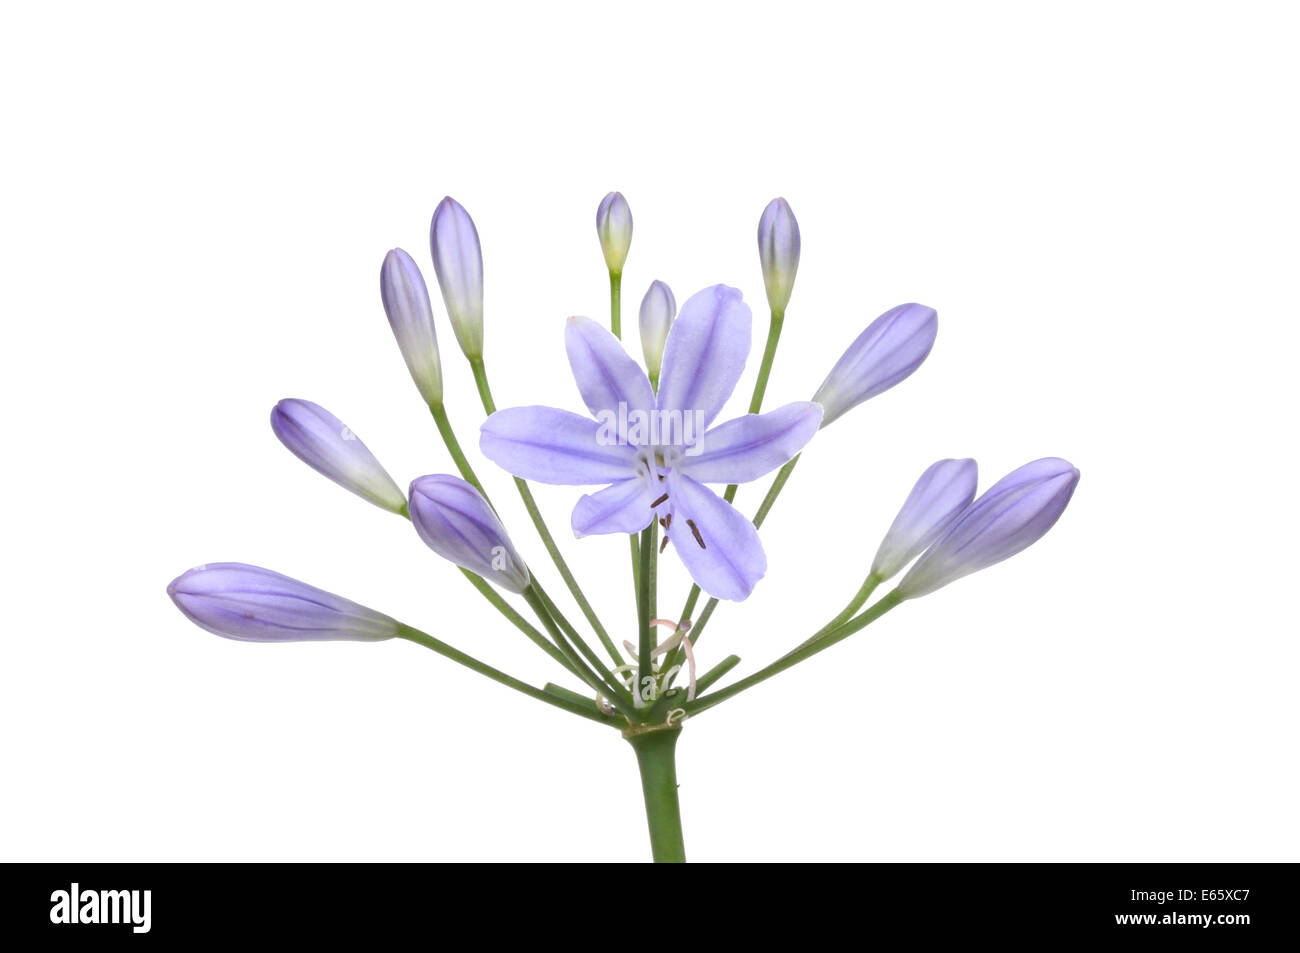 Agapanthus flower isolated against white Stock Photo